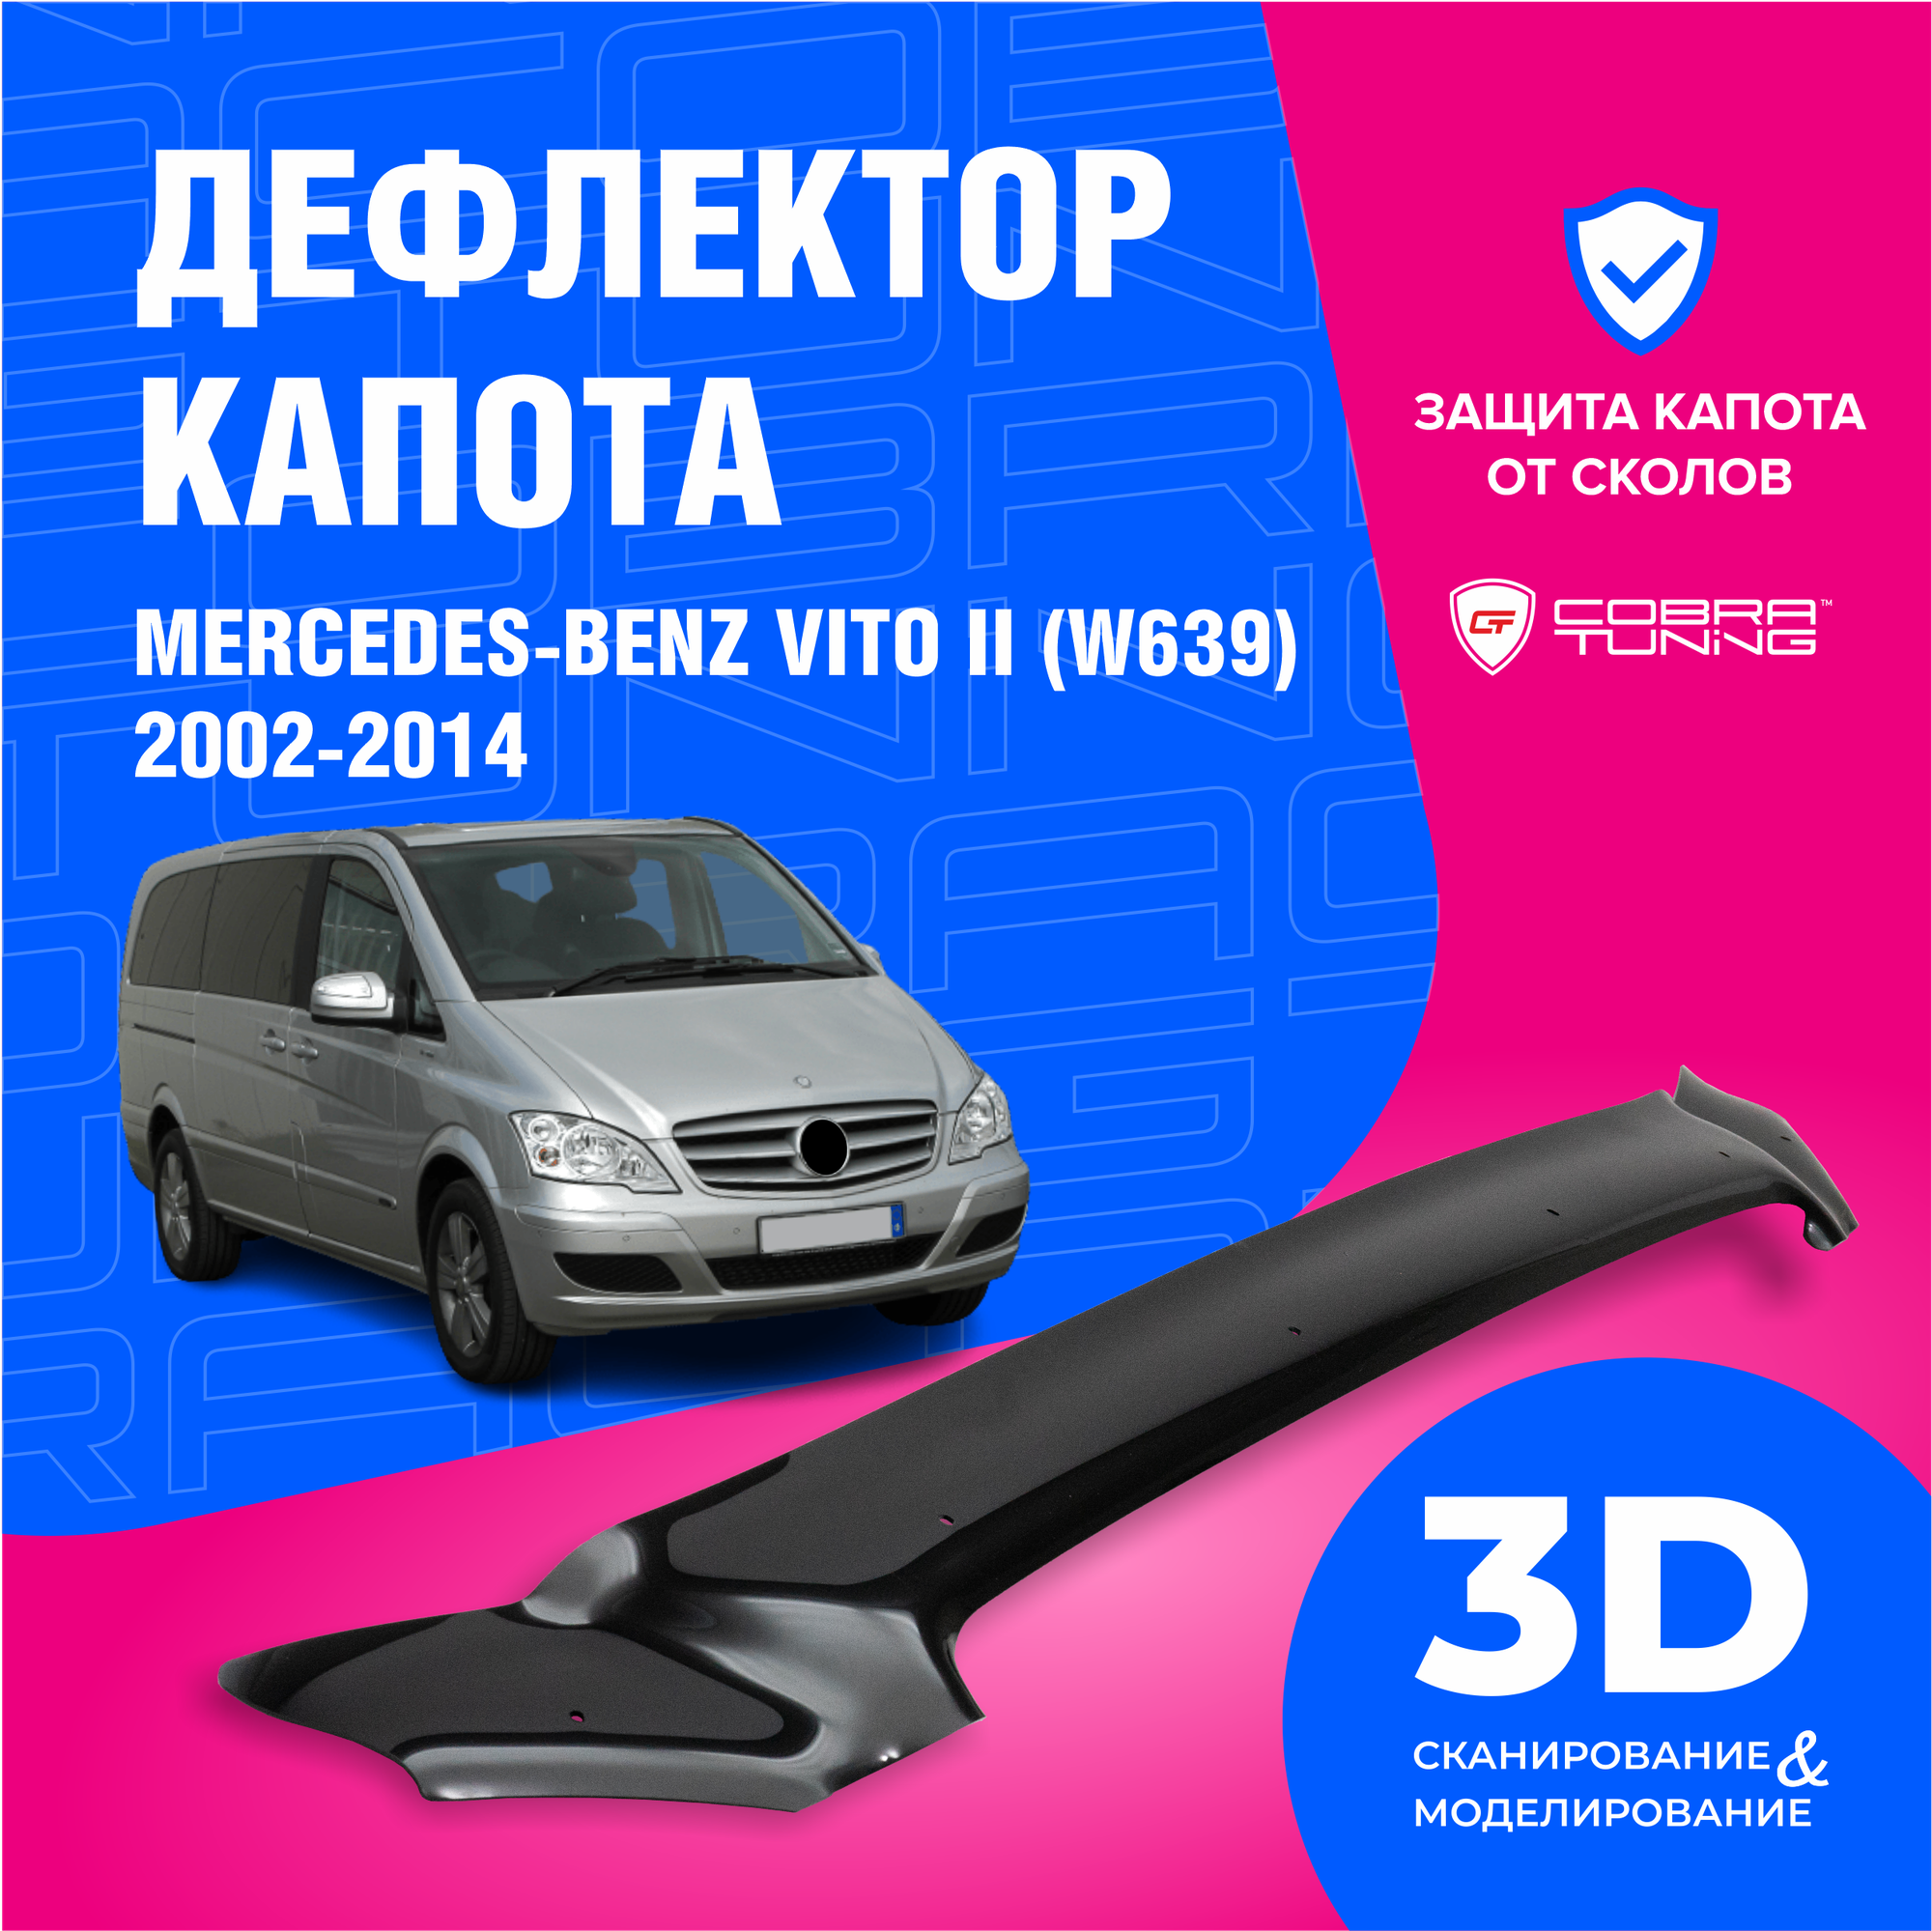 Дефлектор окон Cobra Tuning Дефлекторы окон Cobra Tuning для MERCEDES-BENZ VITO II W639 W447 2002-2014 2014- ветровики на окна накладные M30302 для Mercedes-Benz Vito Mercedes-Benz Viano